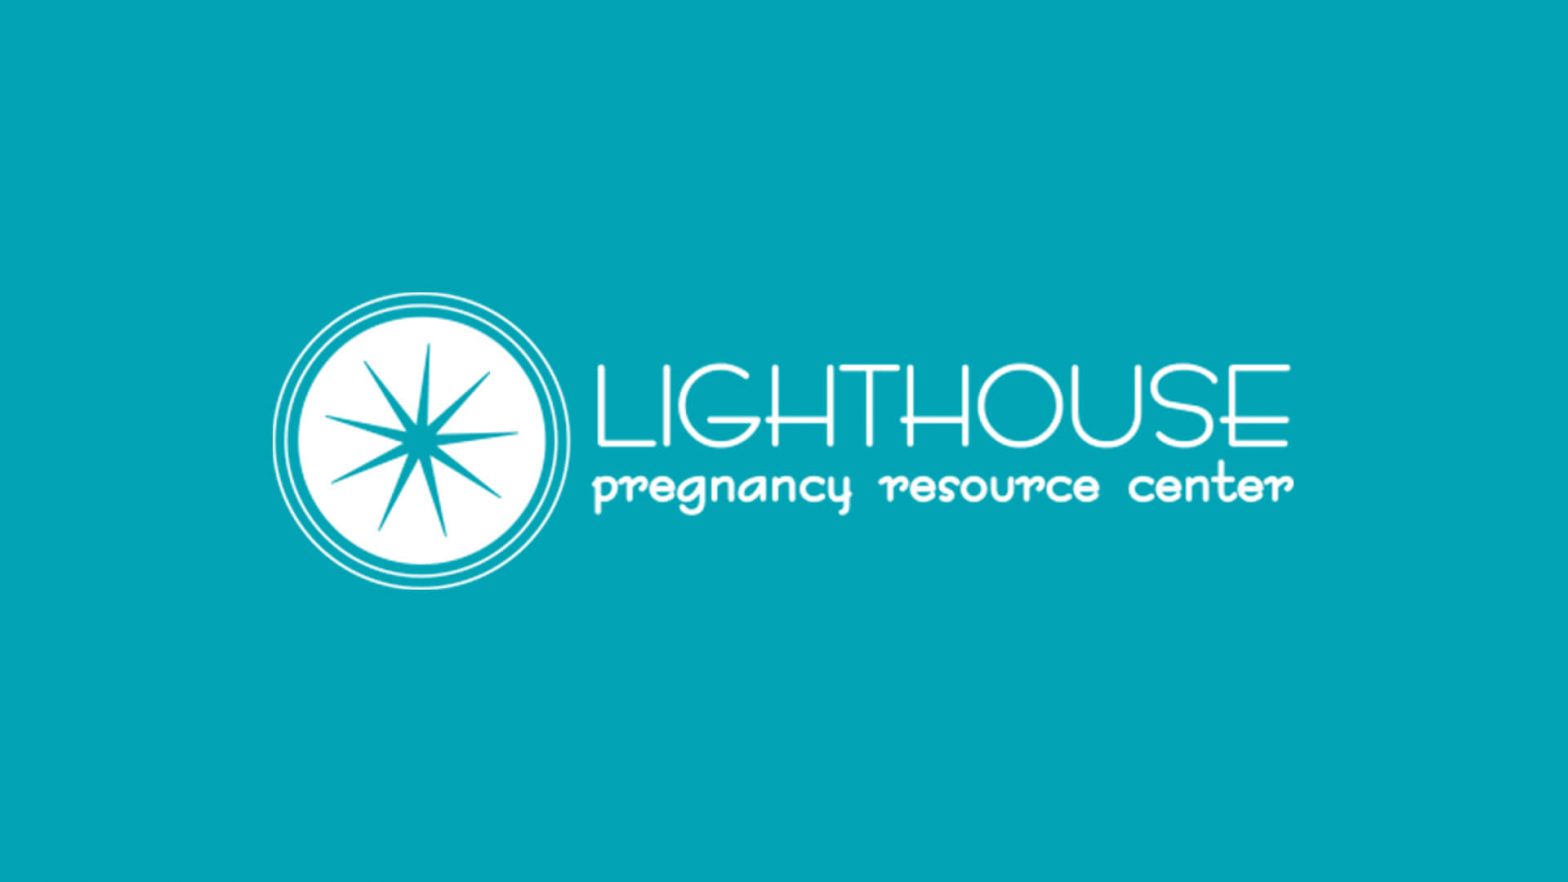 Lighthouse logo